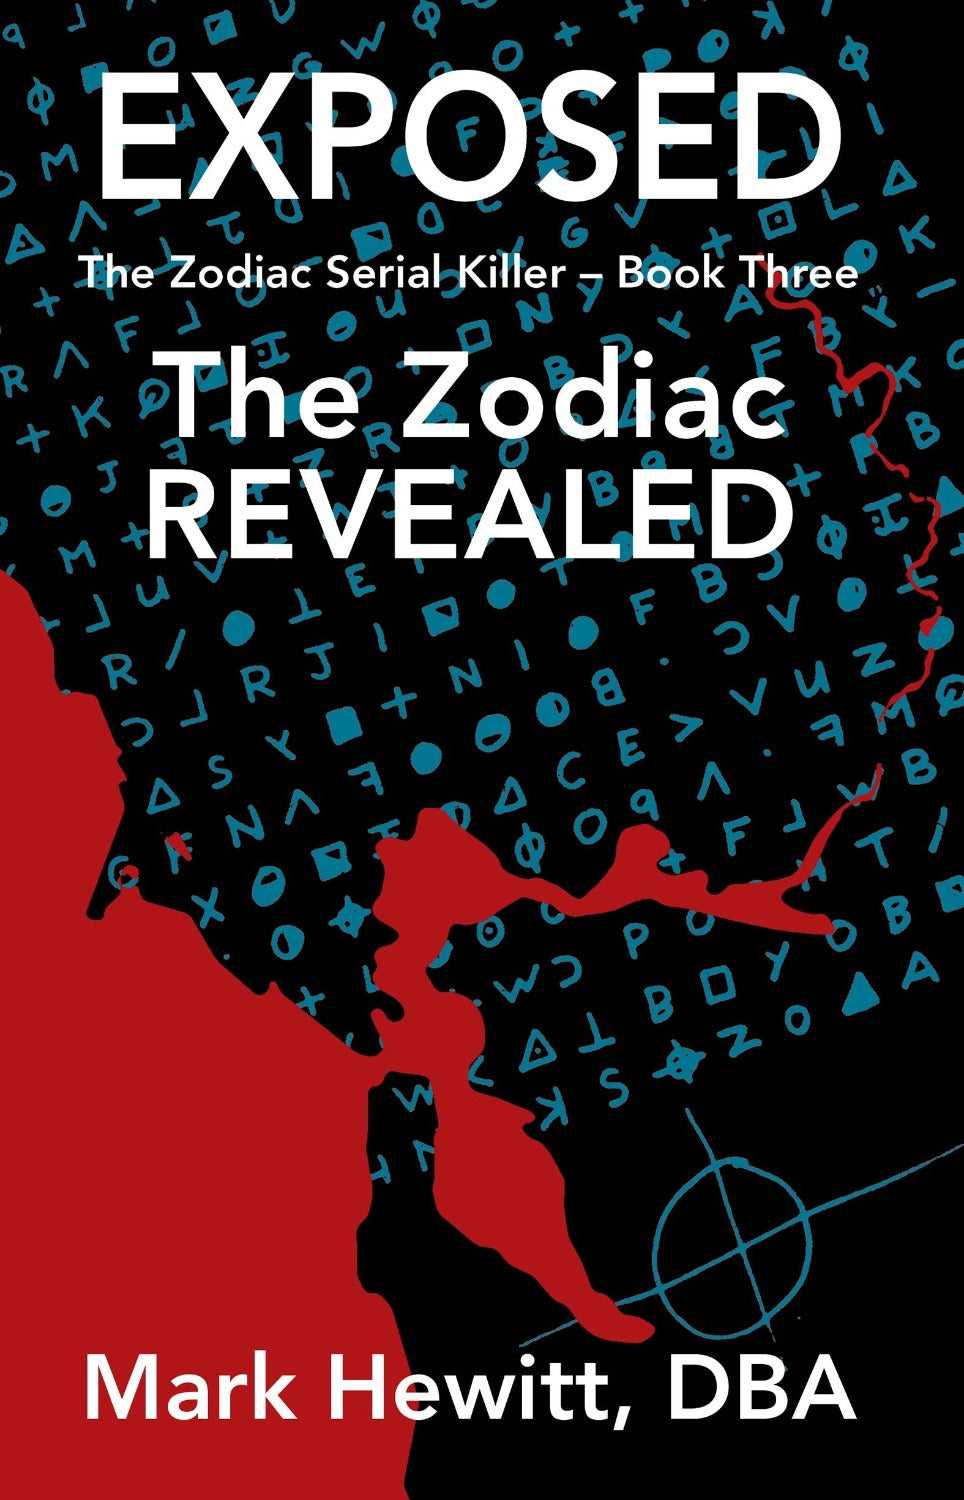 Exposed: The Zodiac Revealed